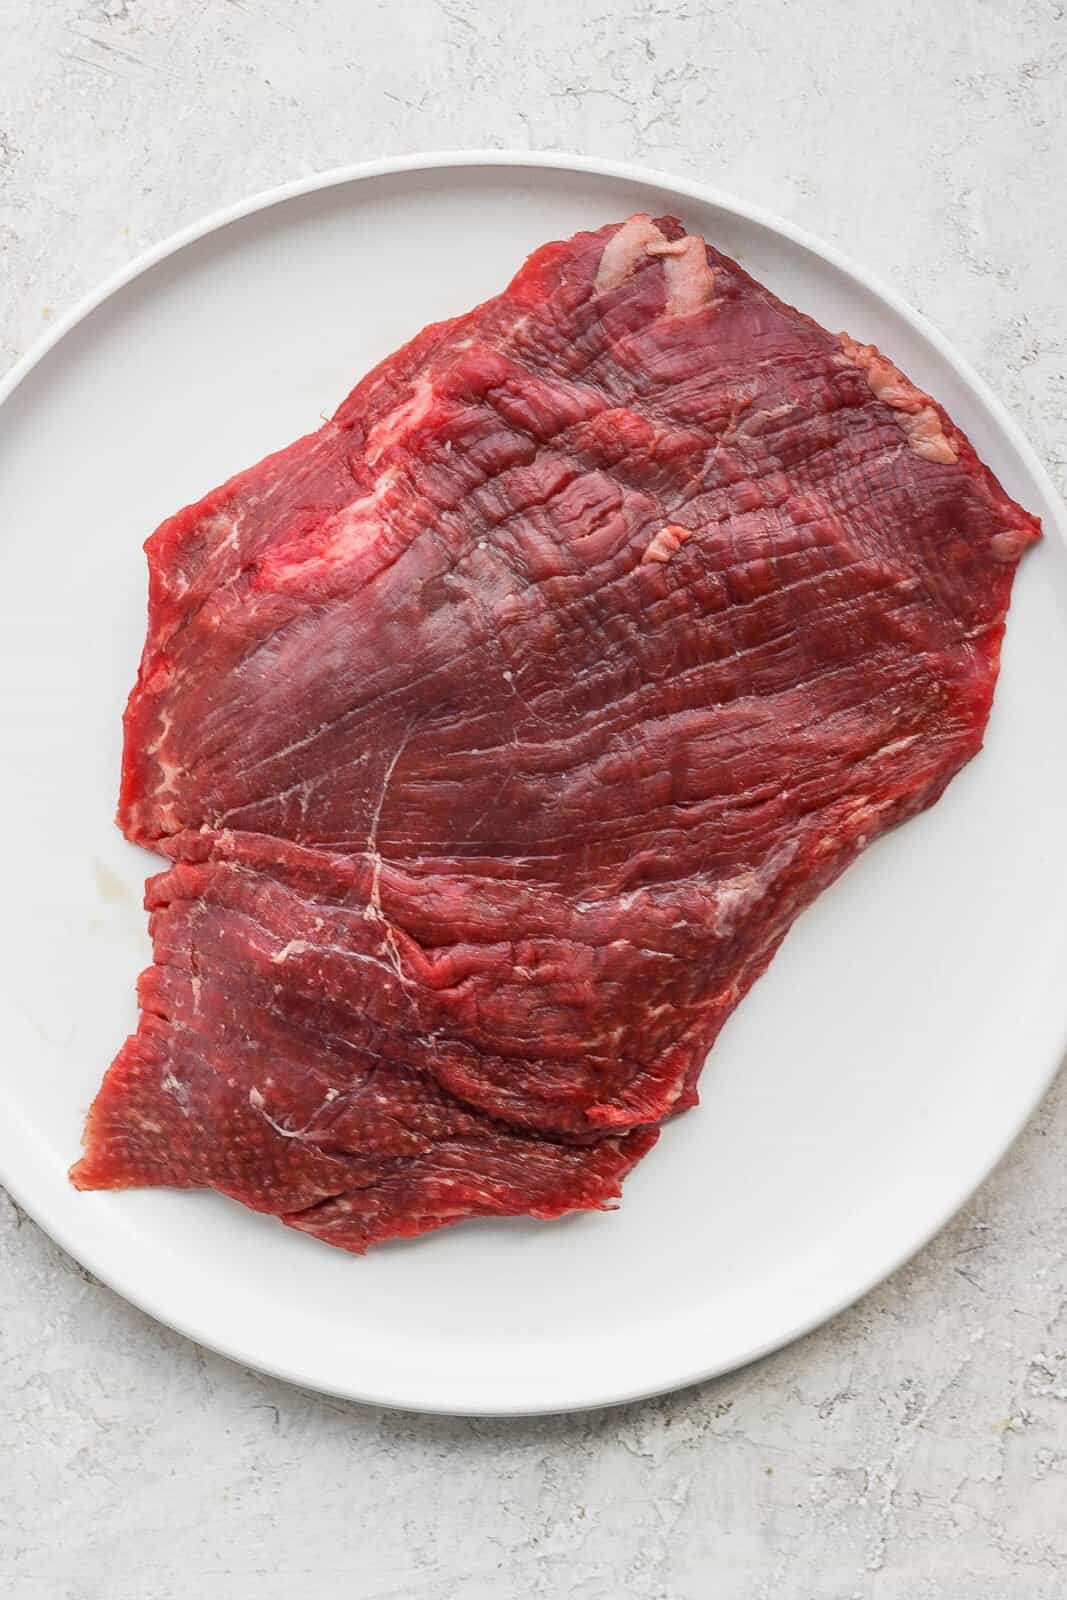 A raw flank steak on a plate.